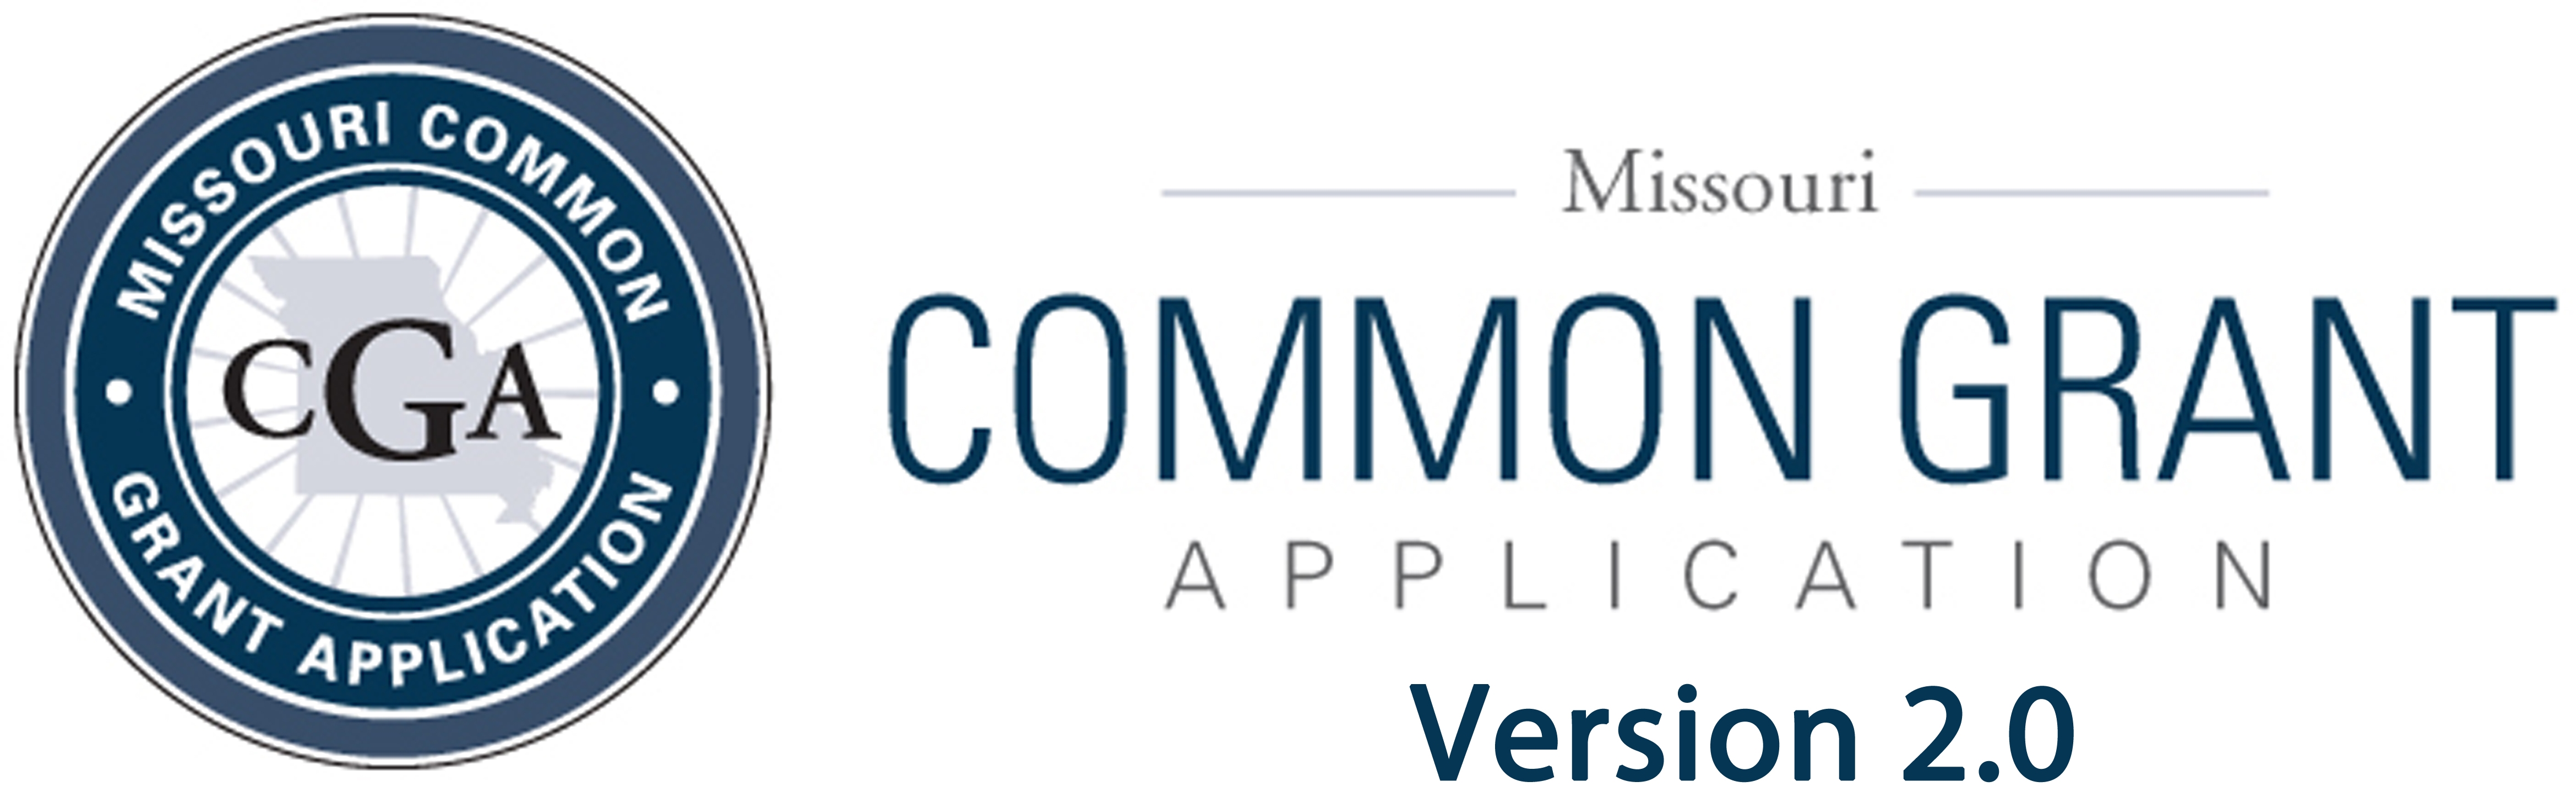 Missouri Common Grant Application Logo